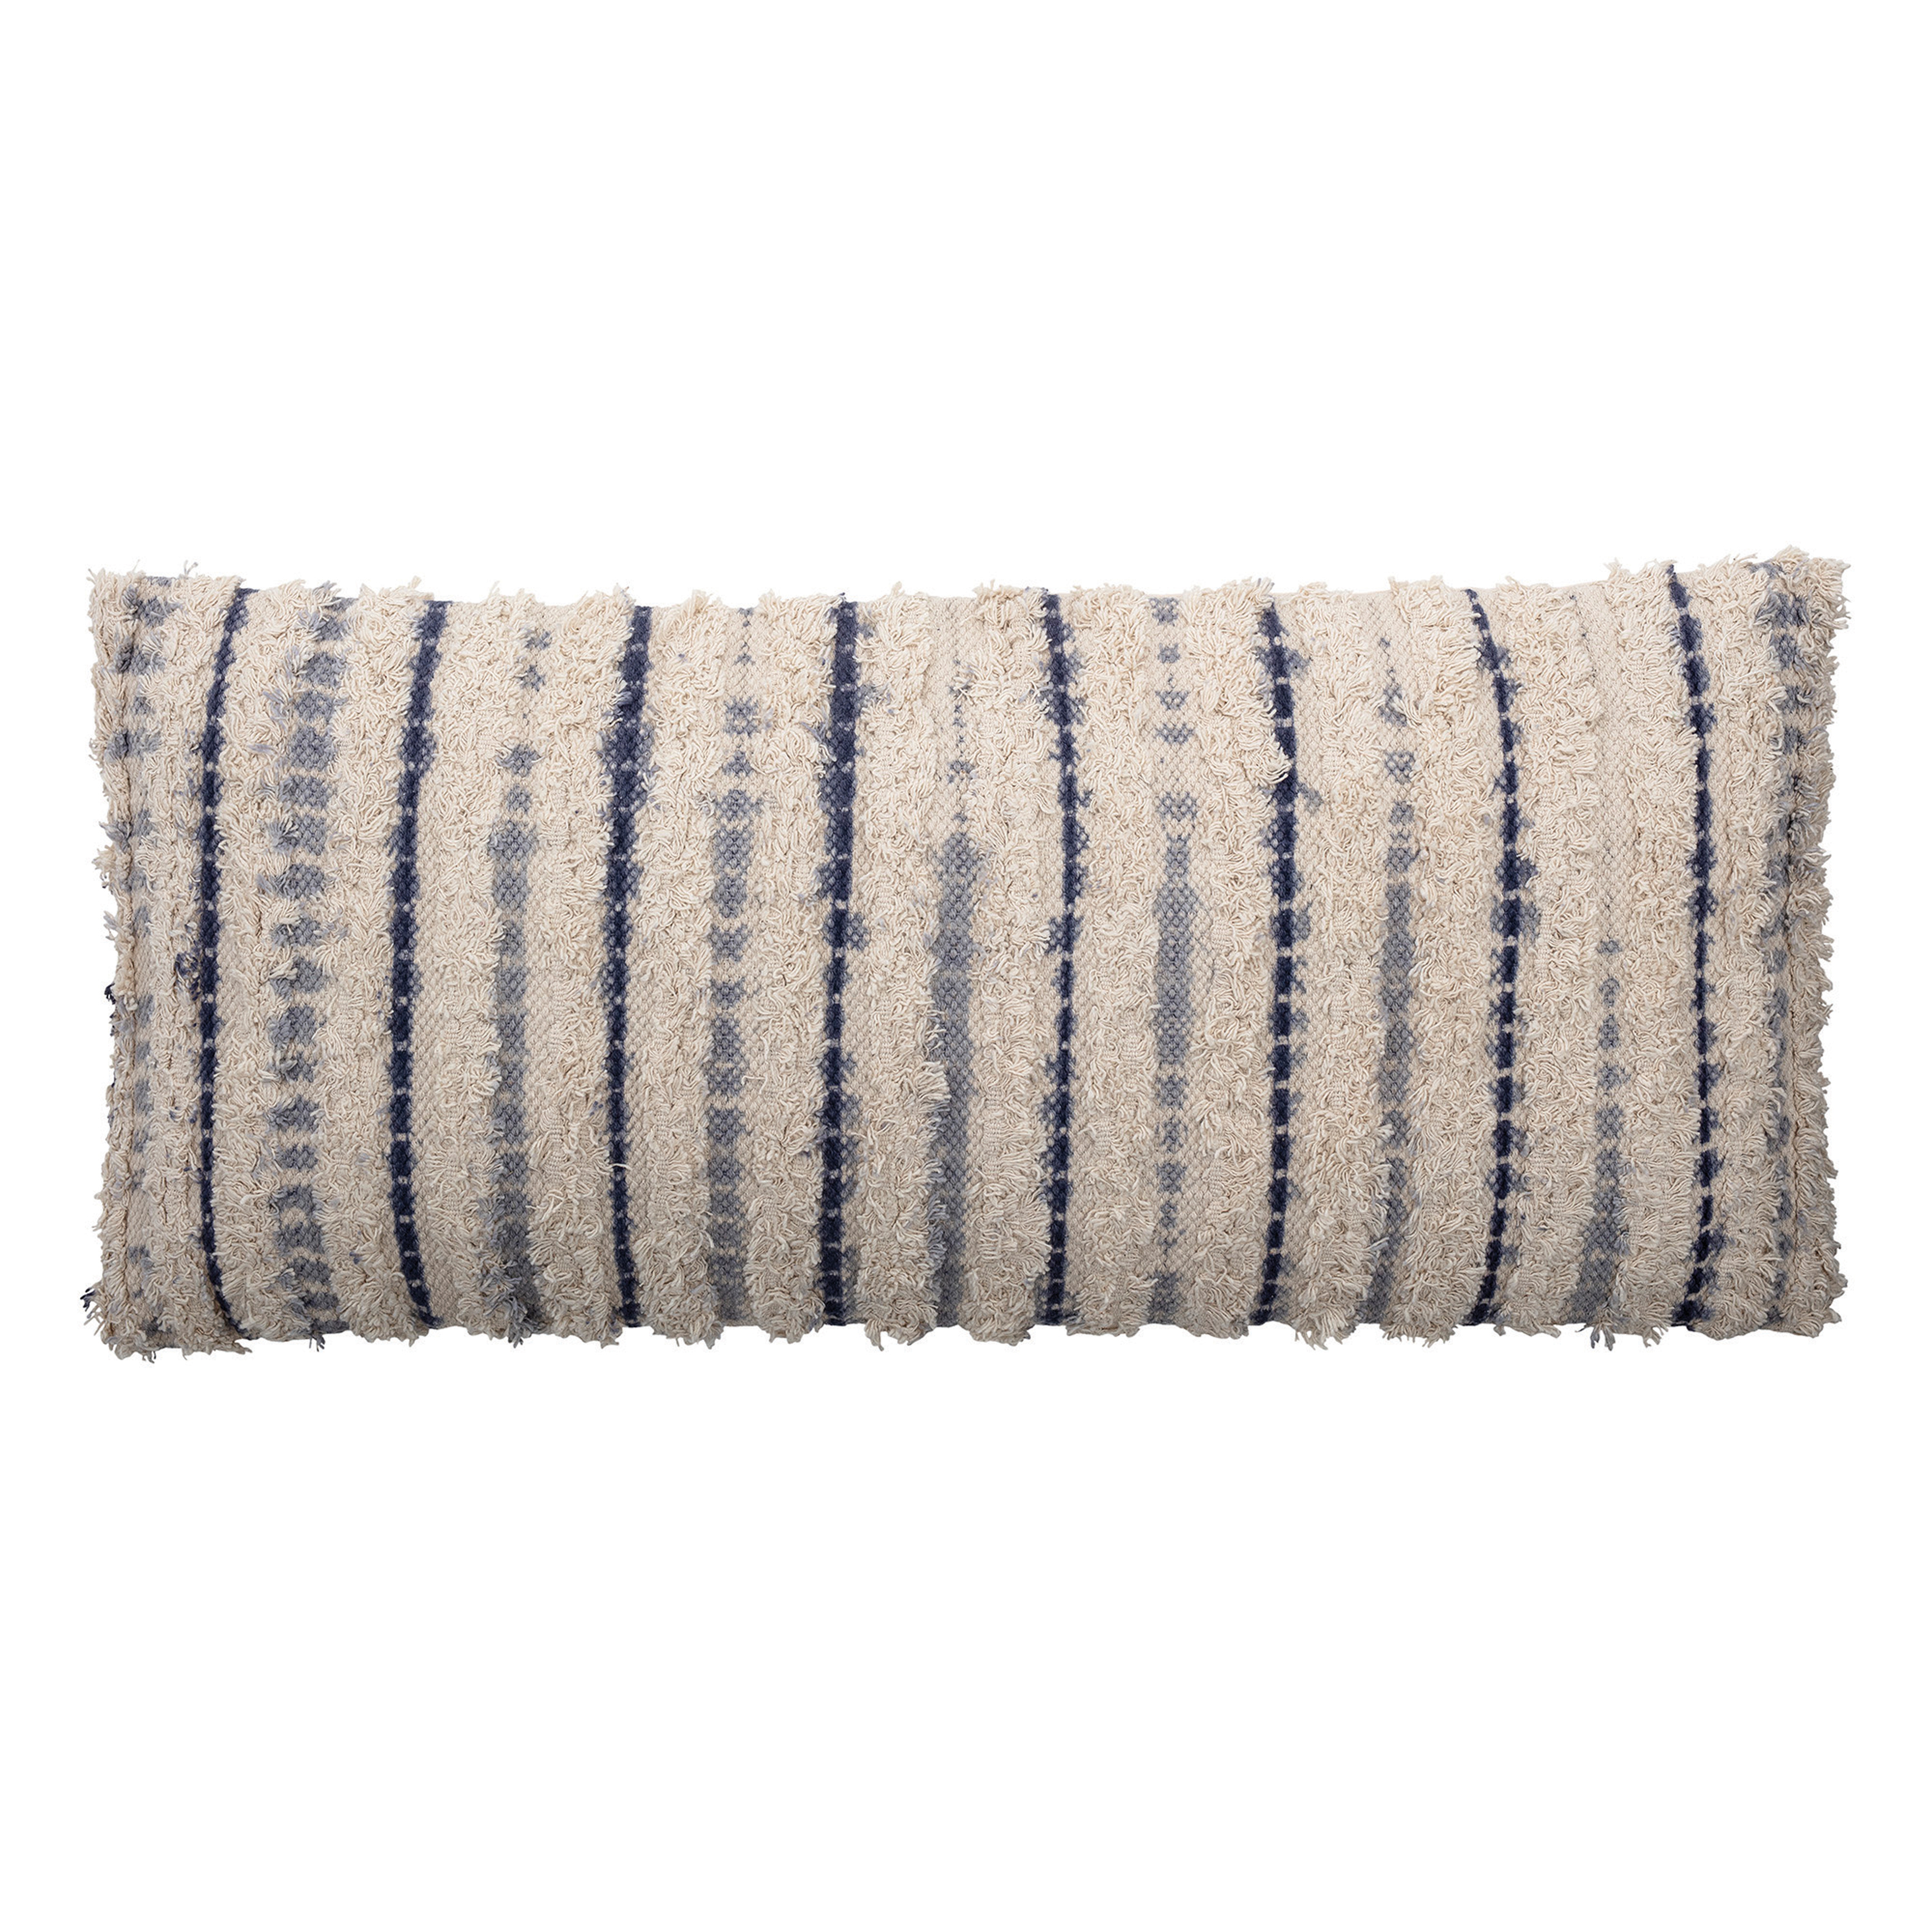 Textured Lumbar Pillow with Tie-Dyed Stripes, Cotton, 36" x 16" - Moss & Wilder